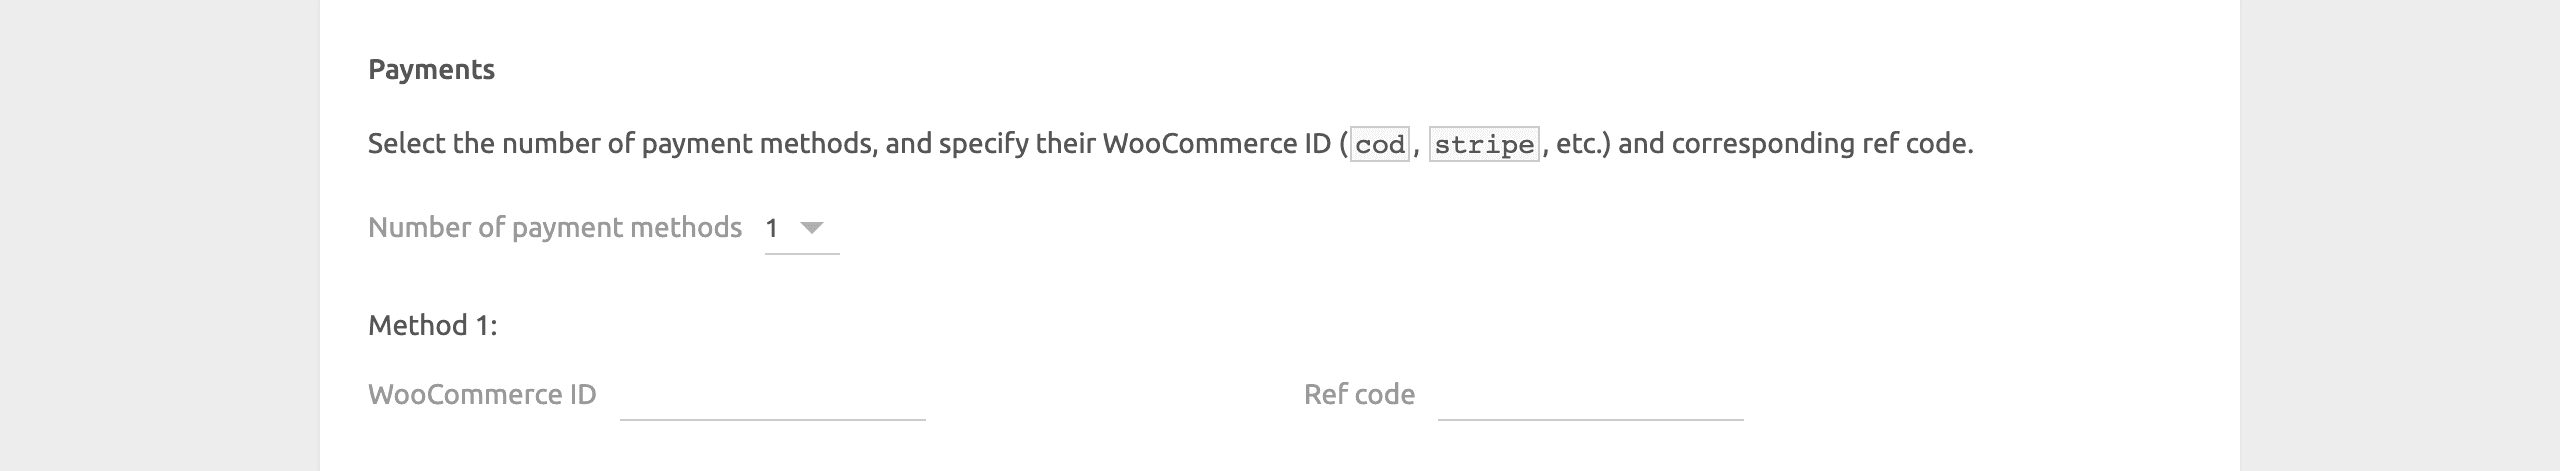 WooCommerce Bridge configuration page, payments